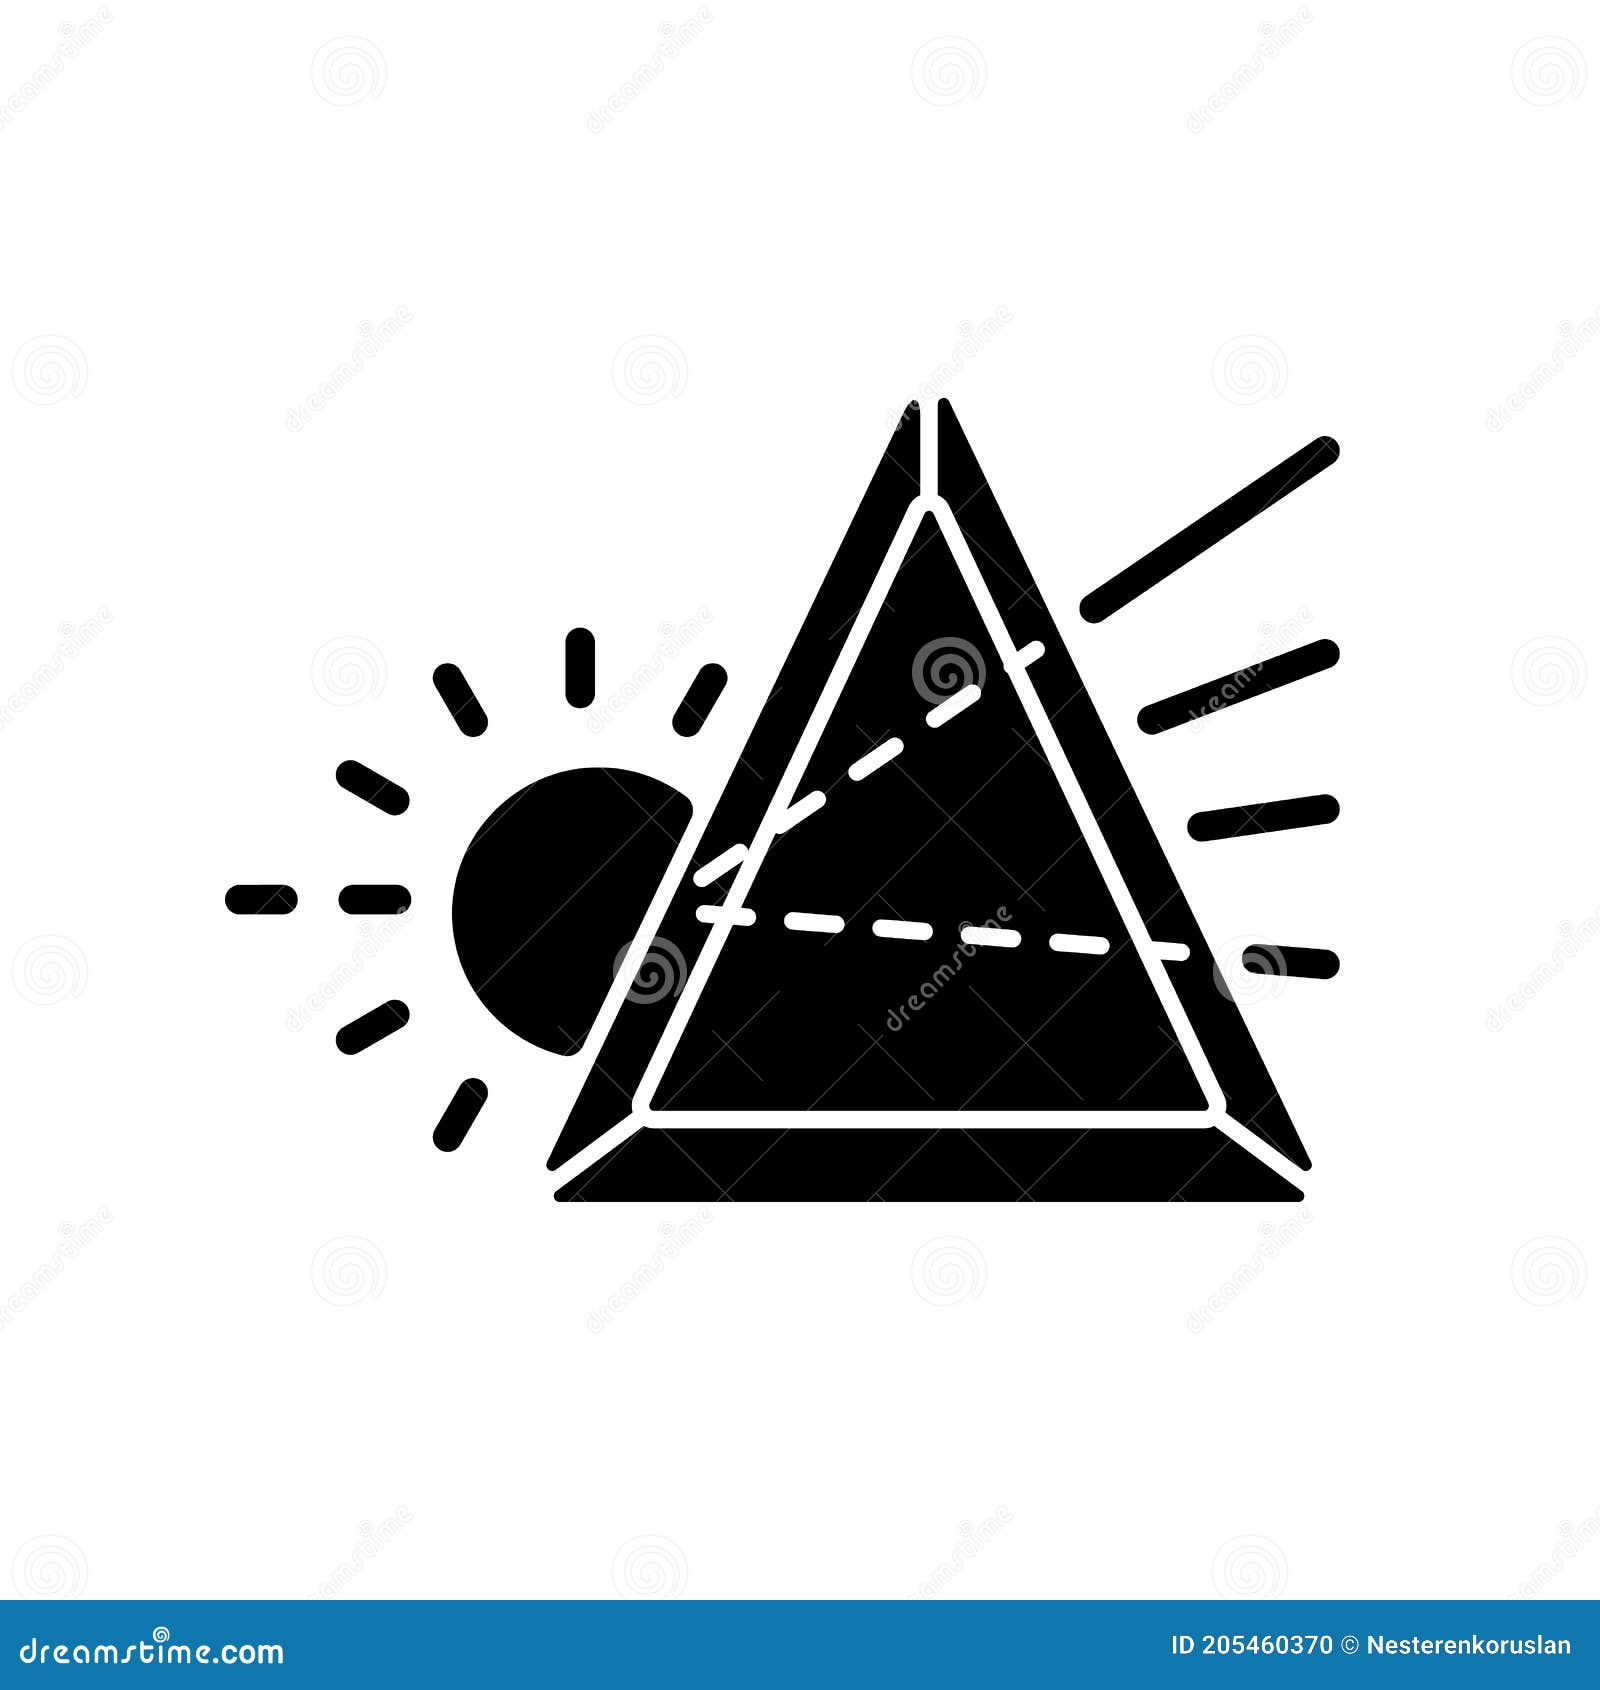 prisma black glyph icon